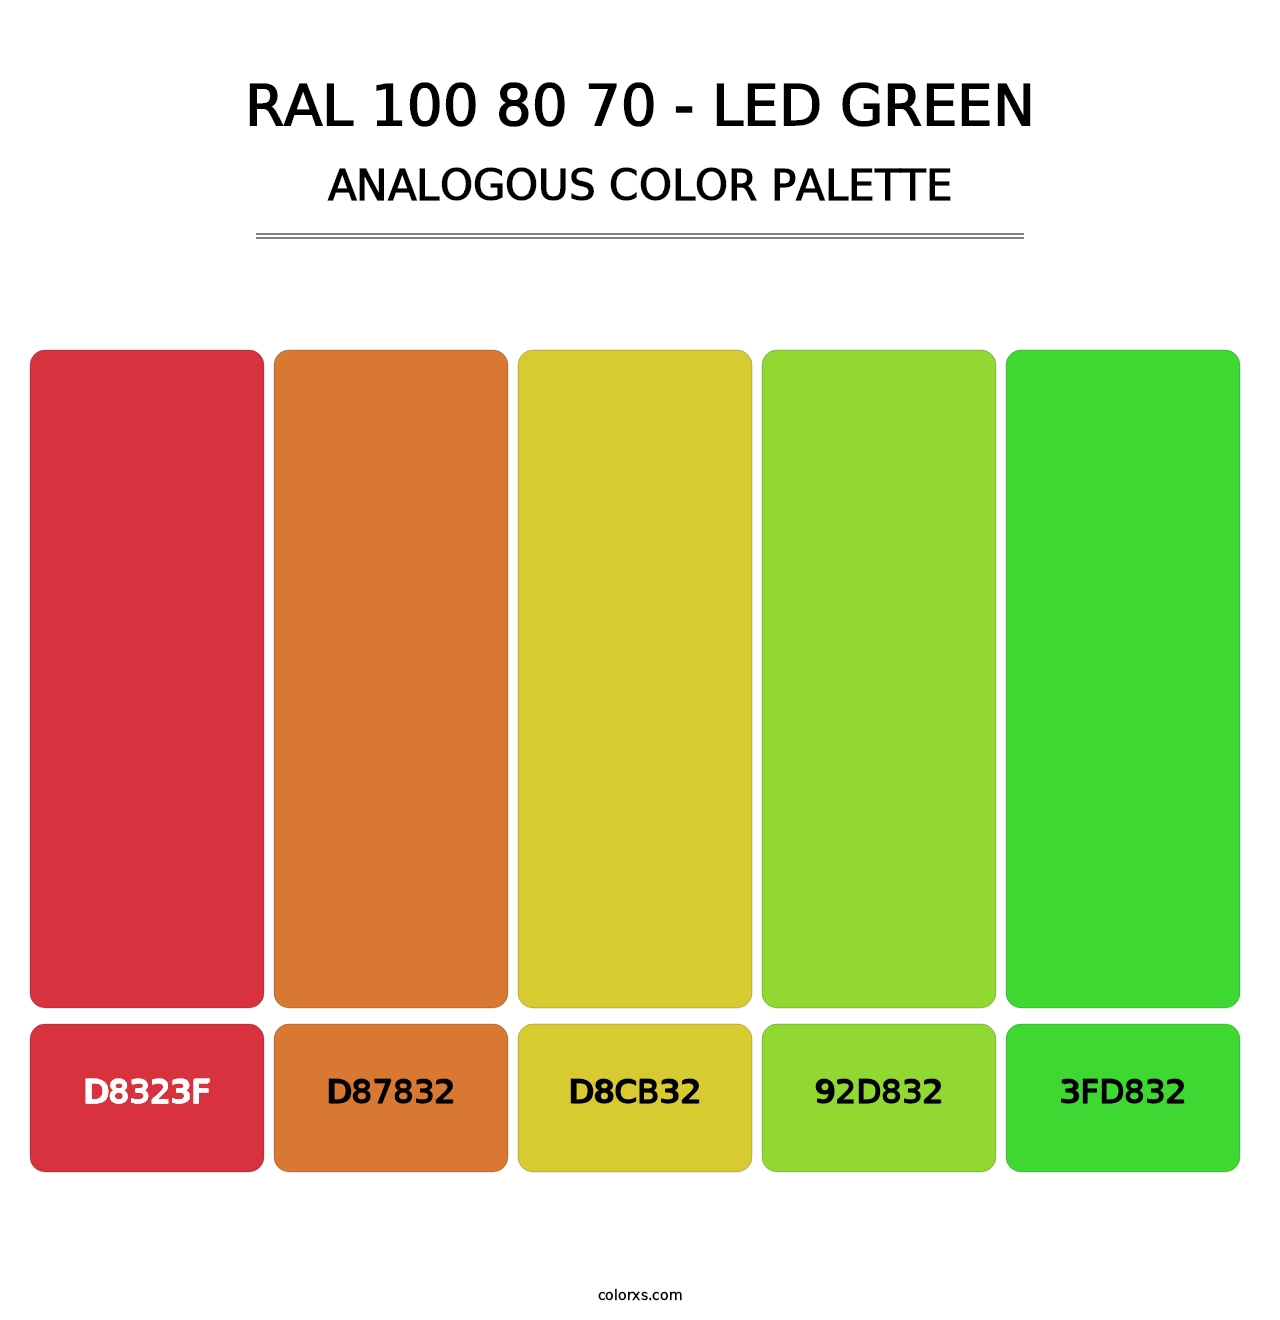 RAL 100 80 70 - LED Green - Analogous Color Palette